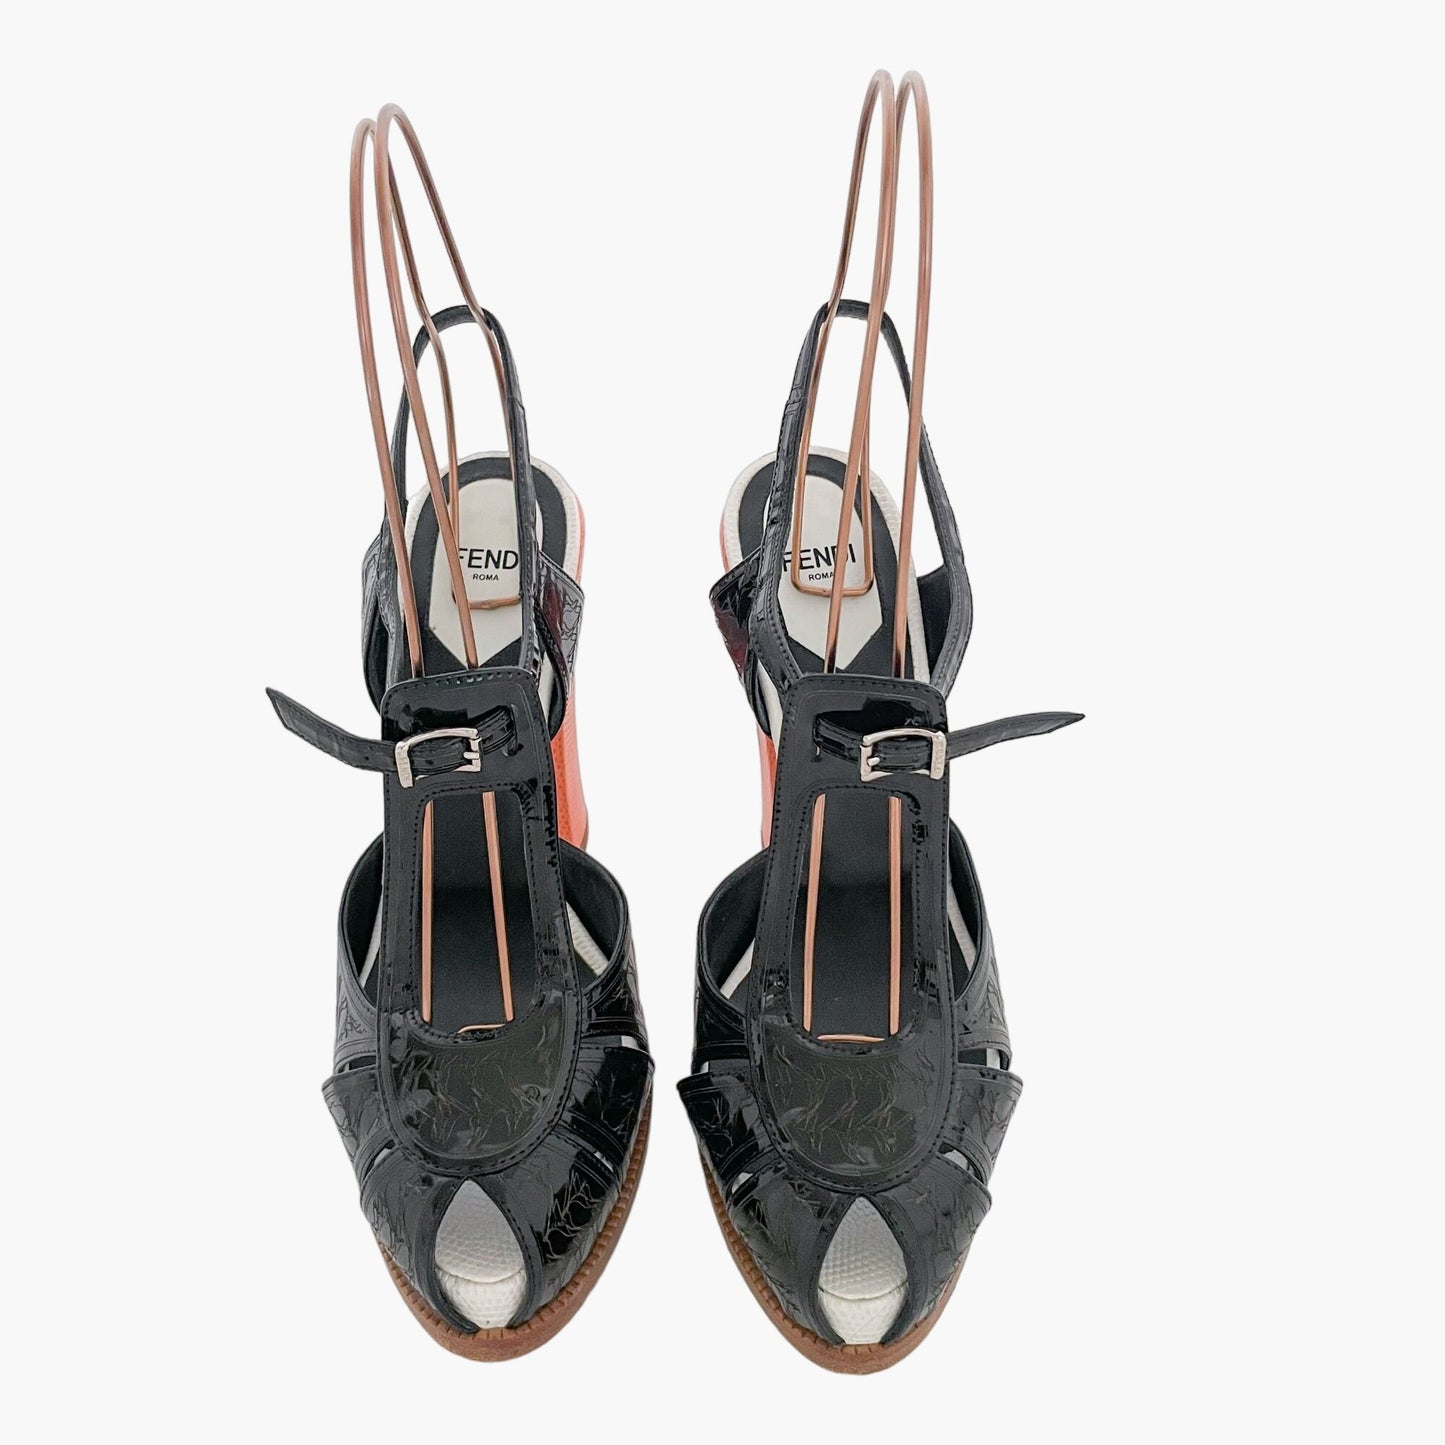 Fendi Chameleon Pumps in Black Patent & Orange Size 38.5